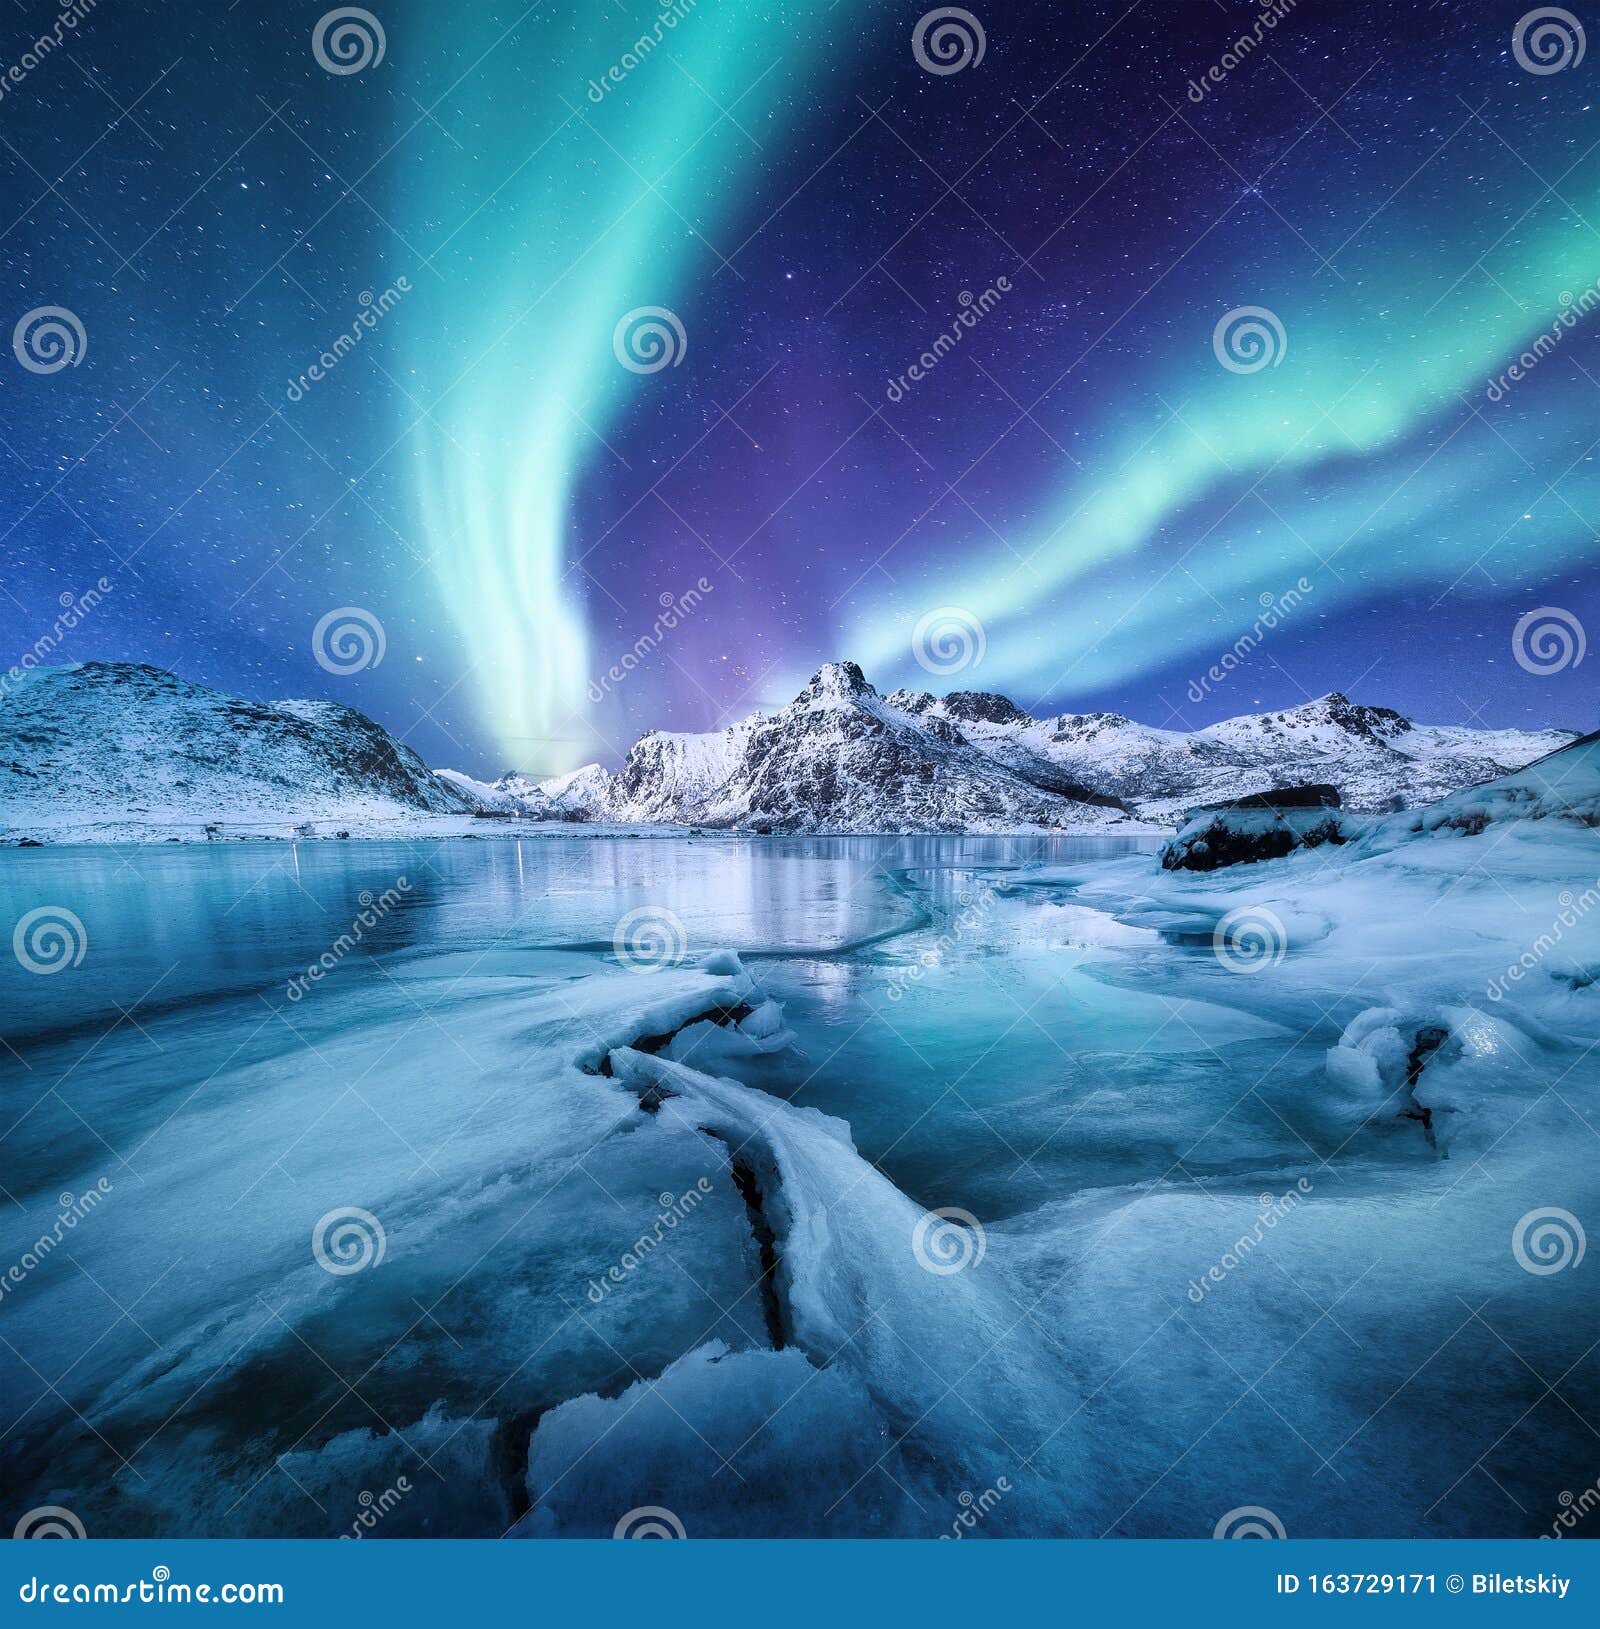 aurora borealis, lofoten islands, norway. nothen light, mountains and frozen ocean. winter landscape at the night time.